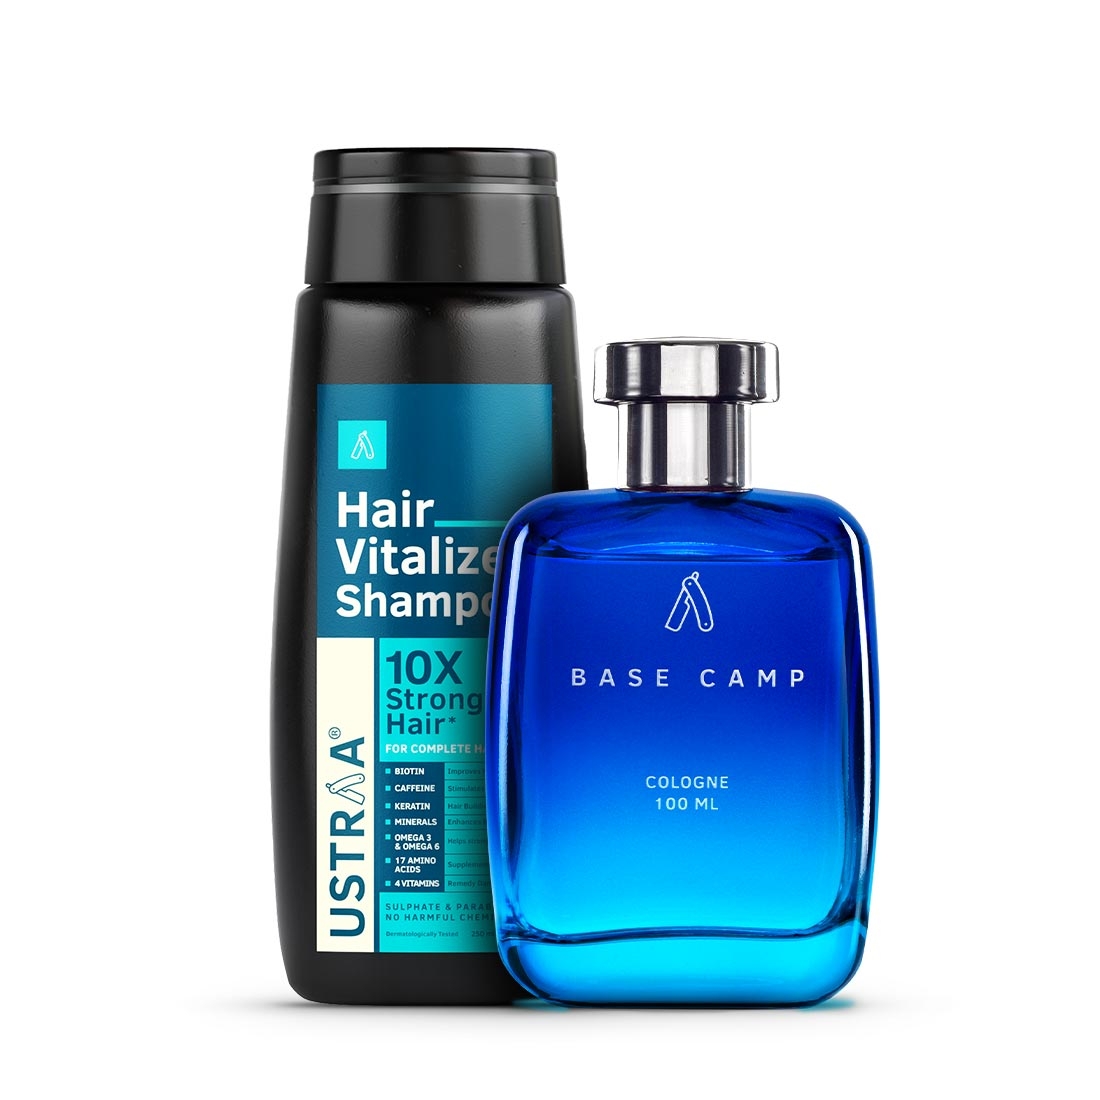 Ustraa | Ustraa Hair Vitalizer Shampoo - 250ml & Base Camp Cologne - 100ml